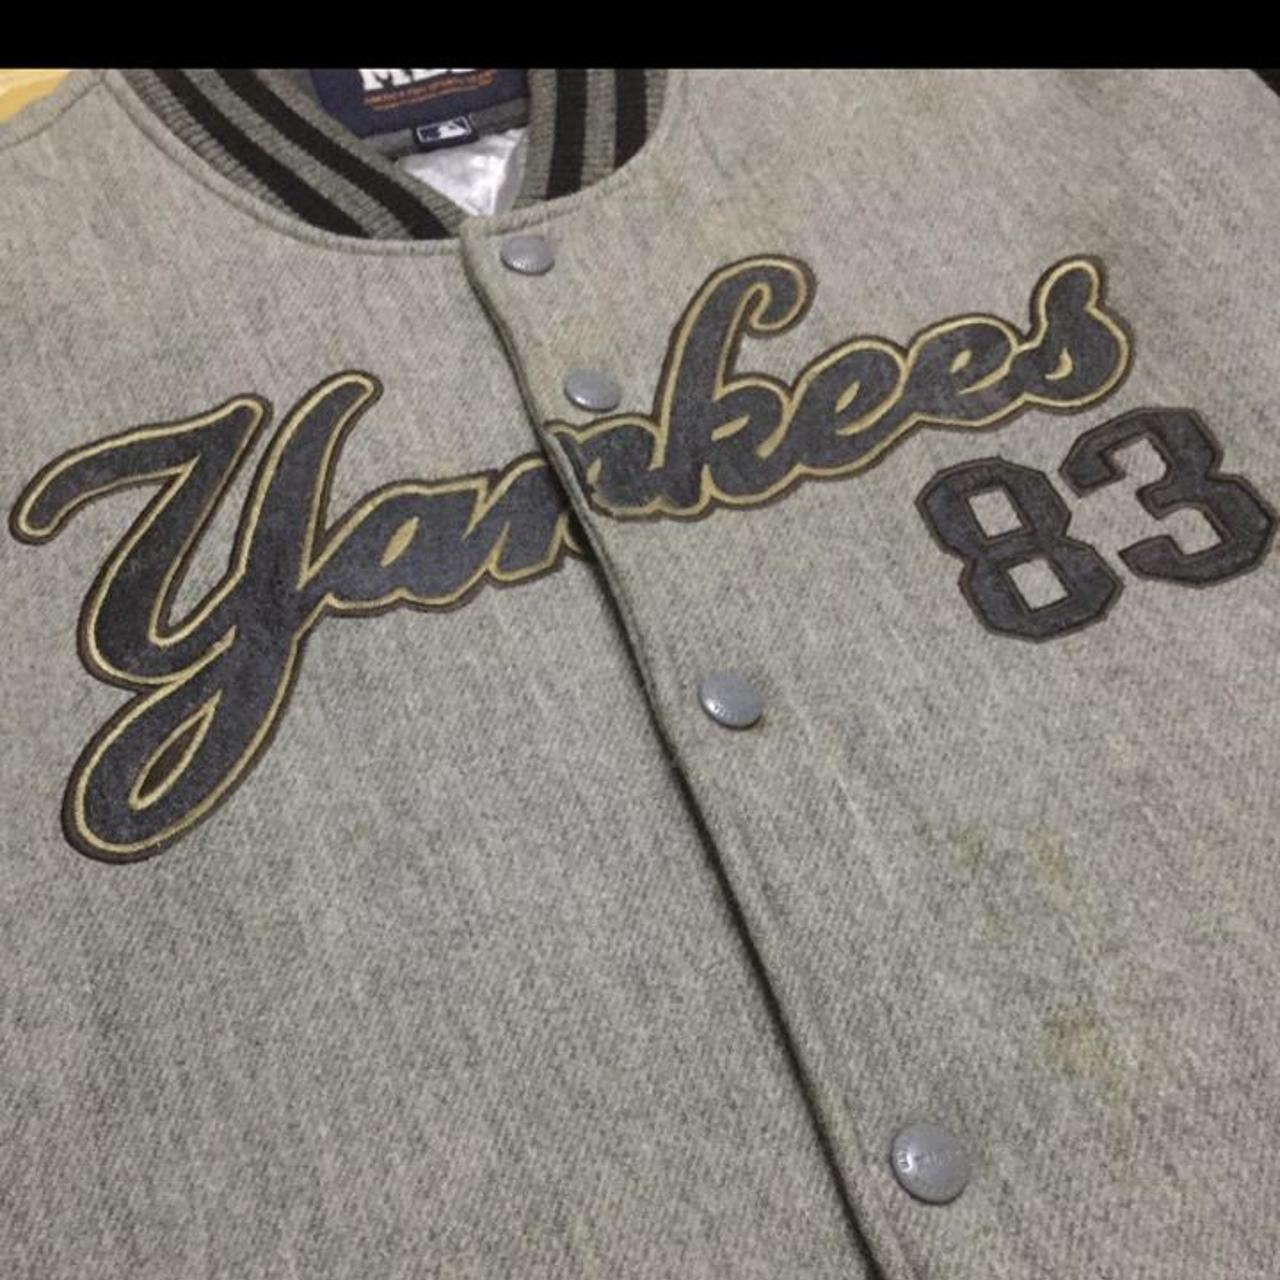 Vintage Yankees Sports Jacket ⚾️ Authentic MLB // - Depop